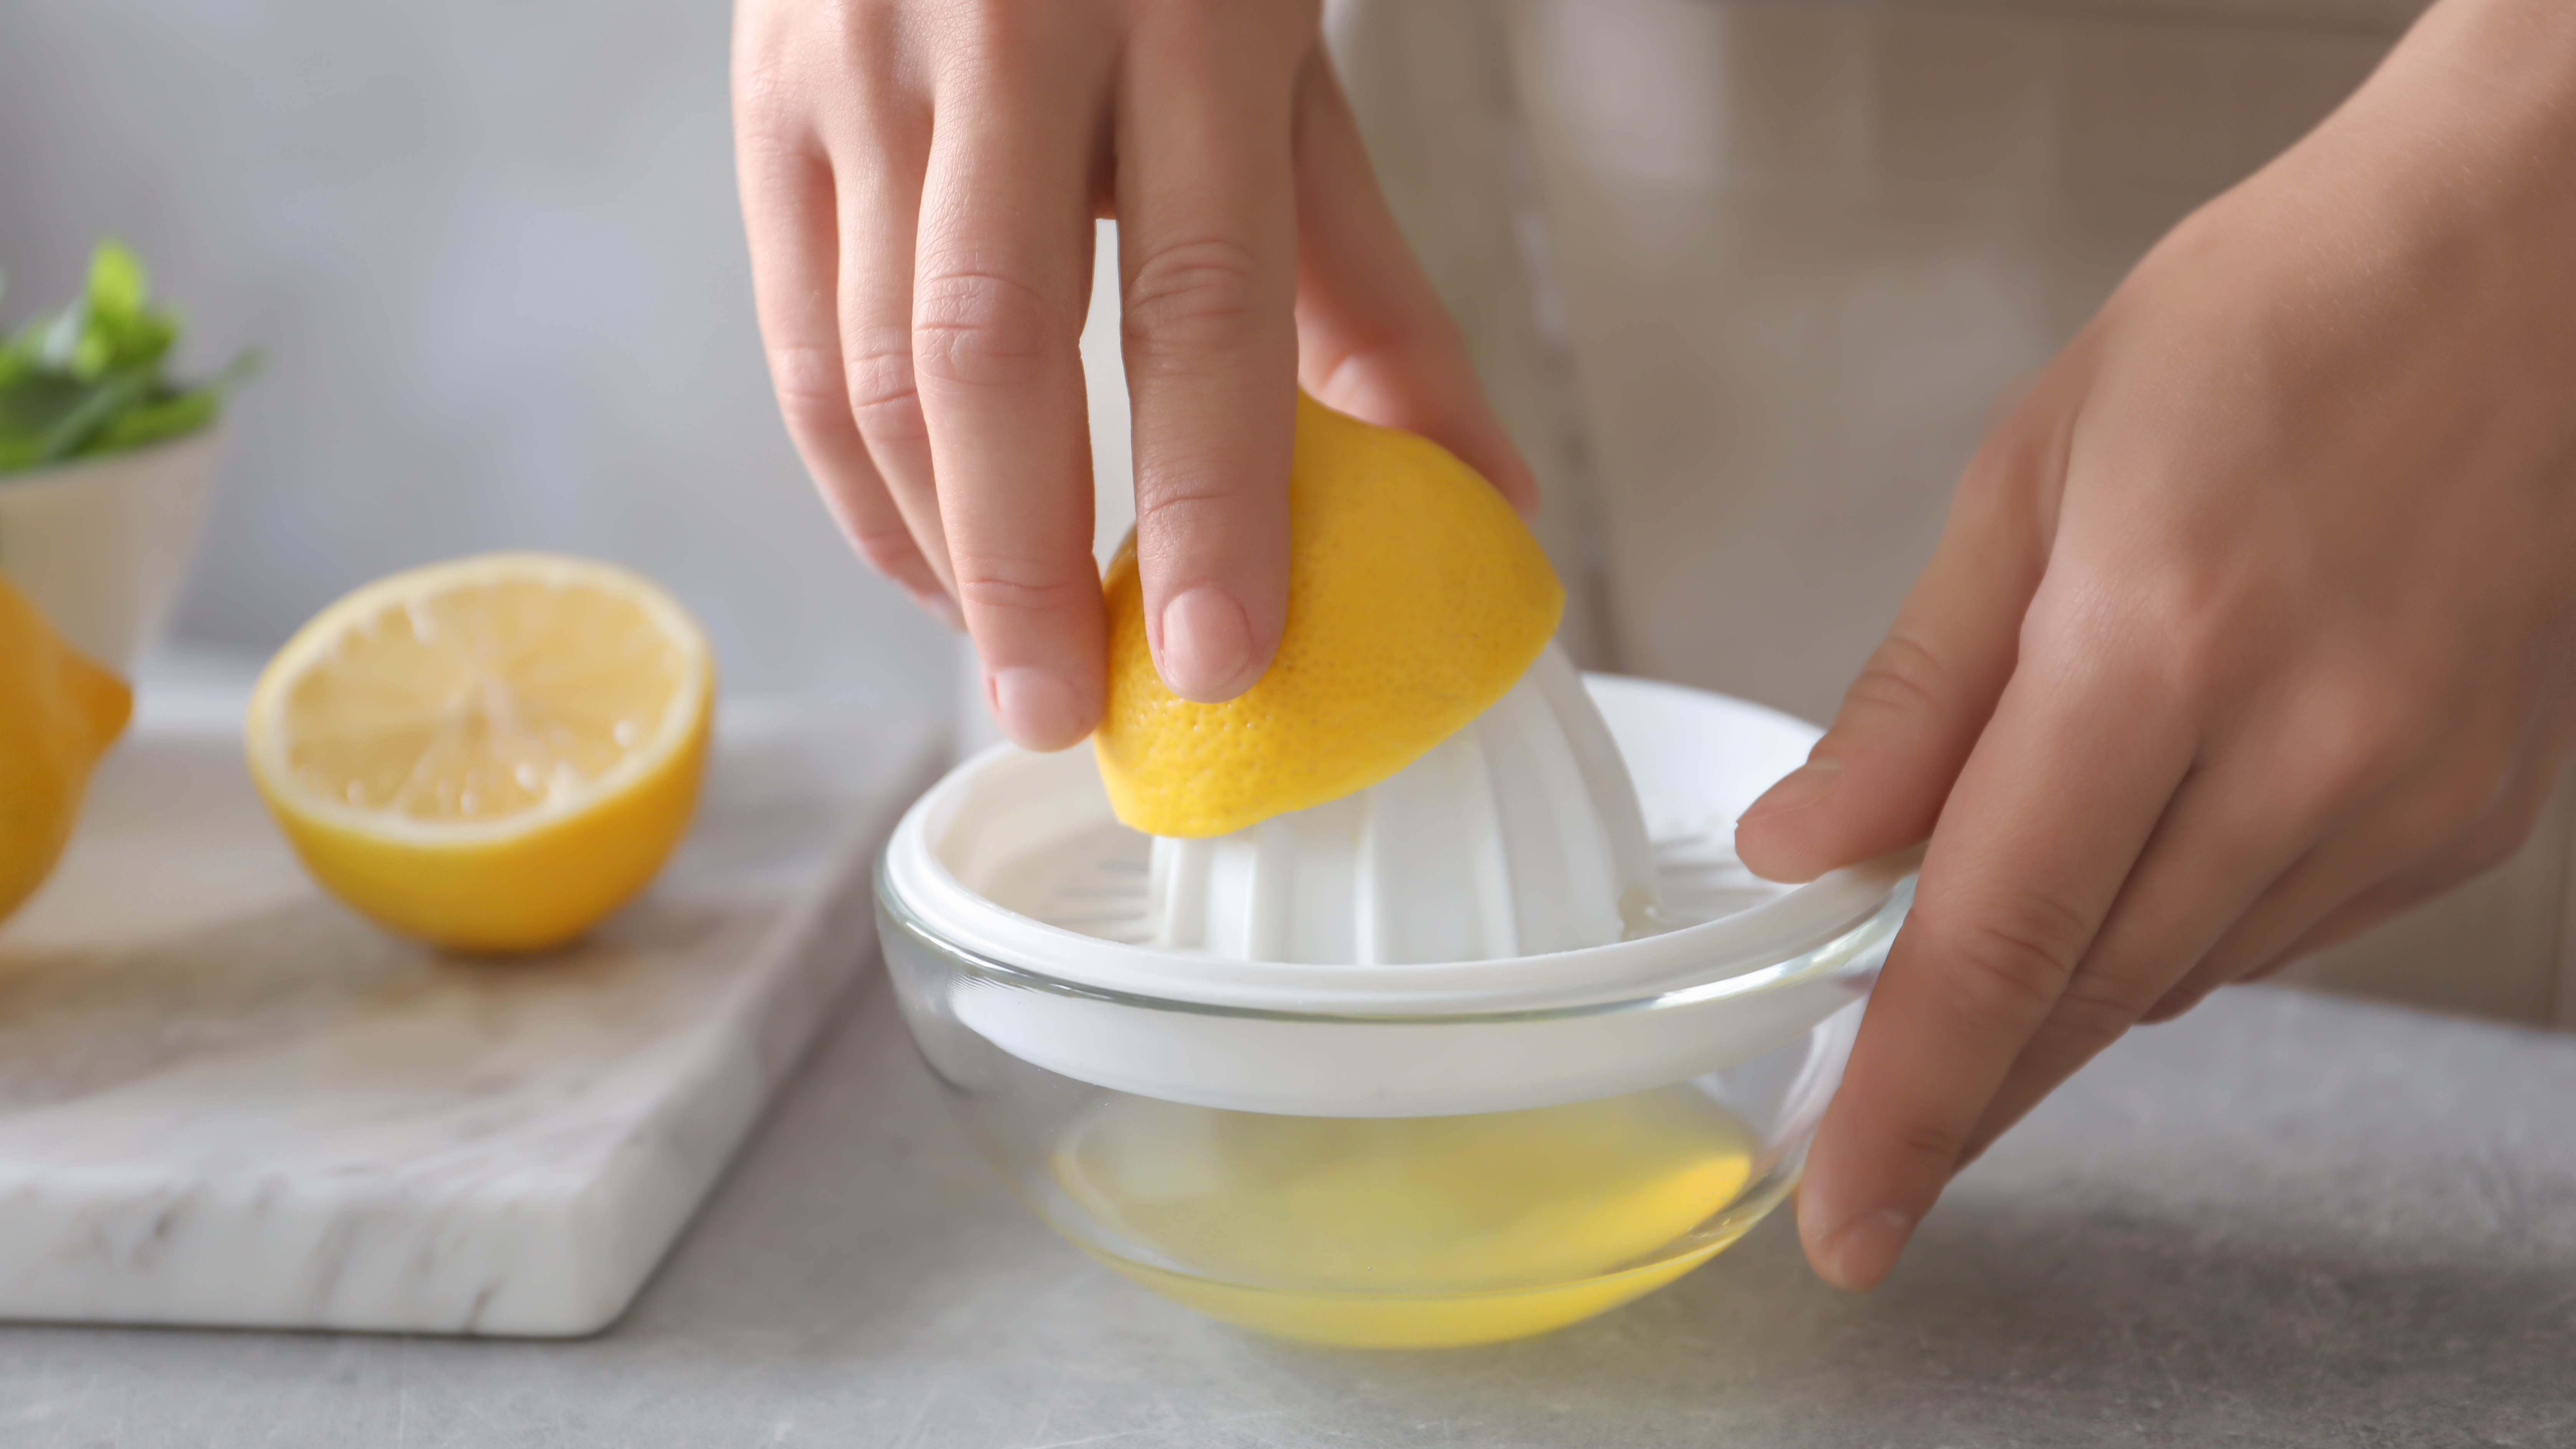 Squeezing a lemon into bowl